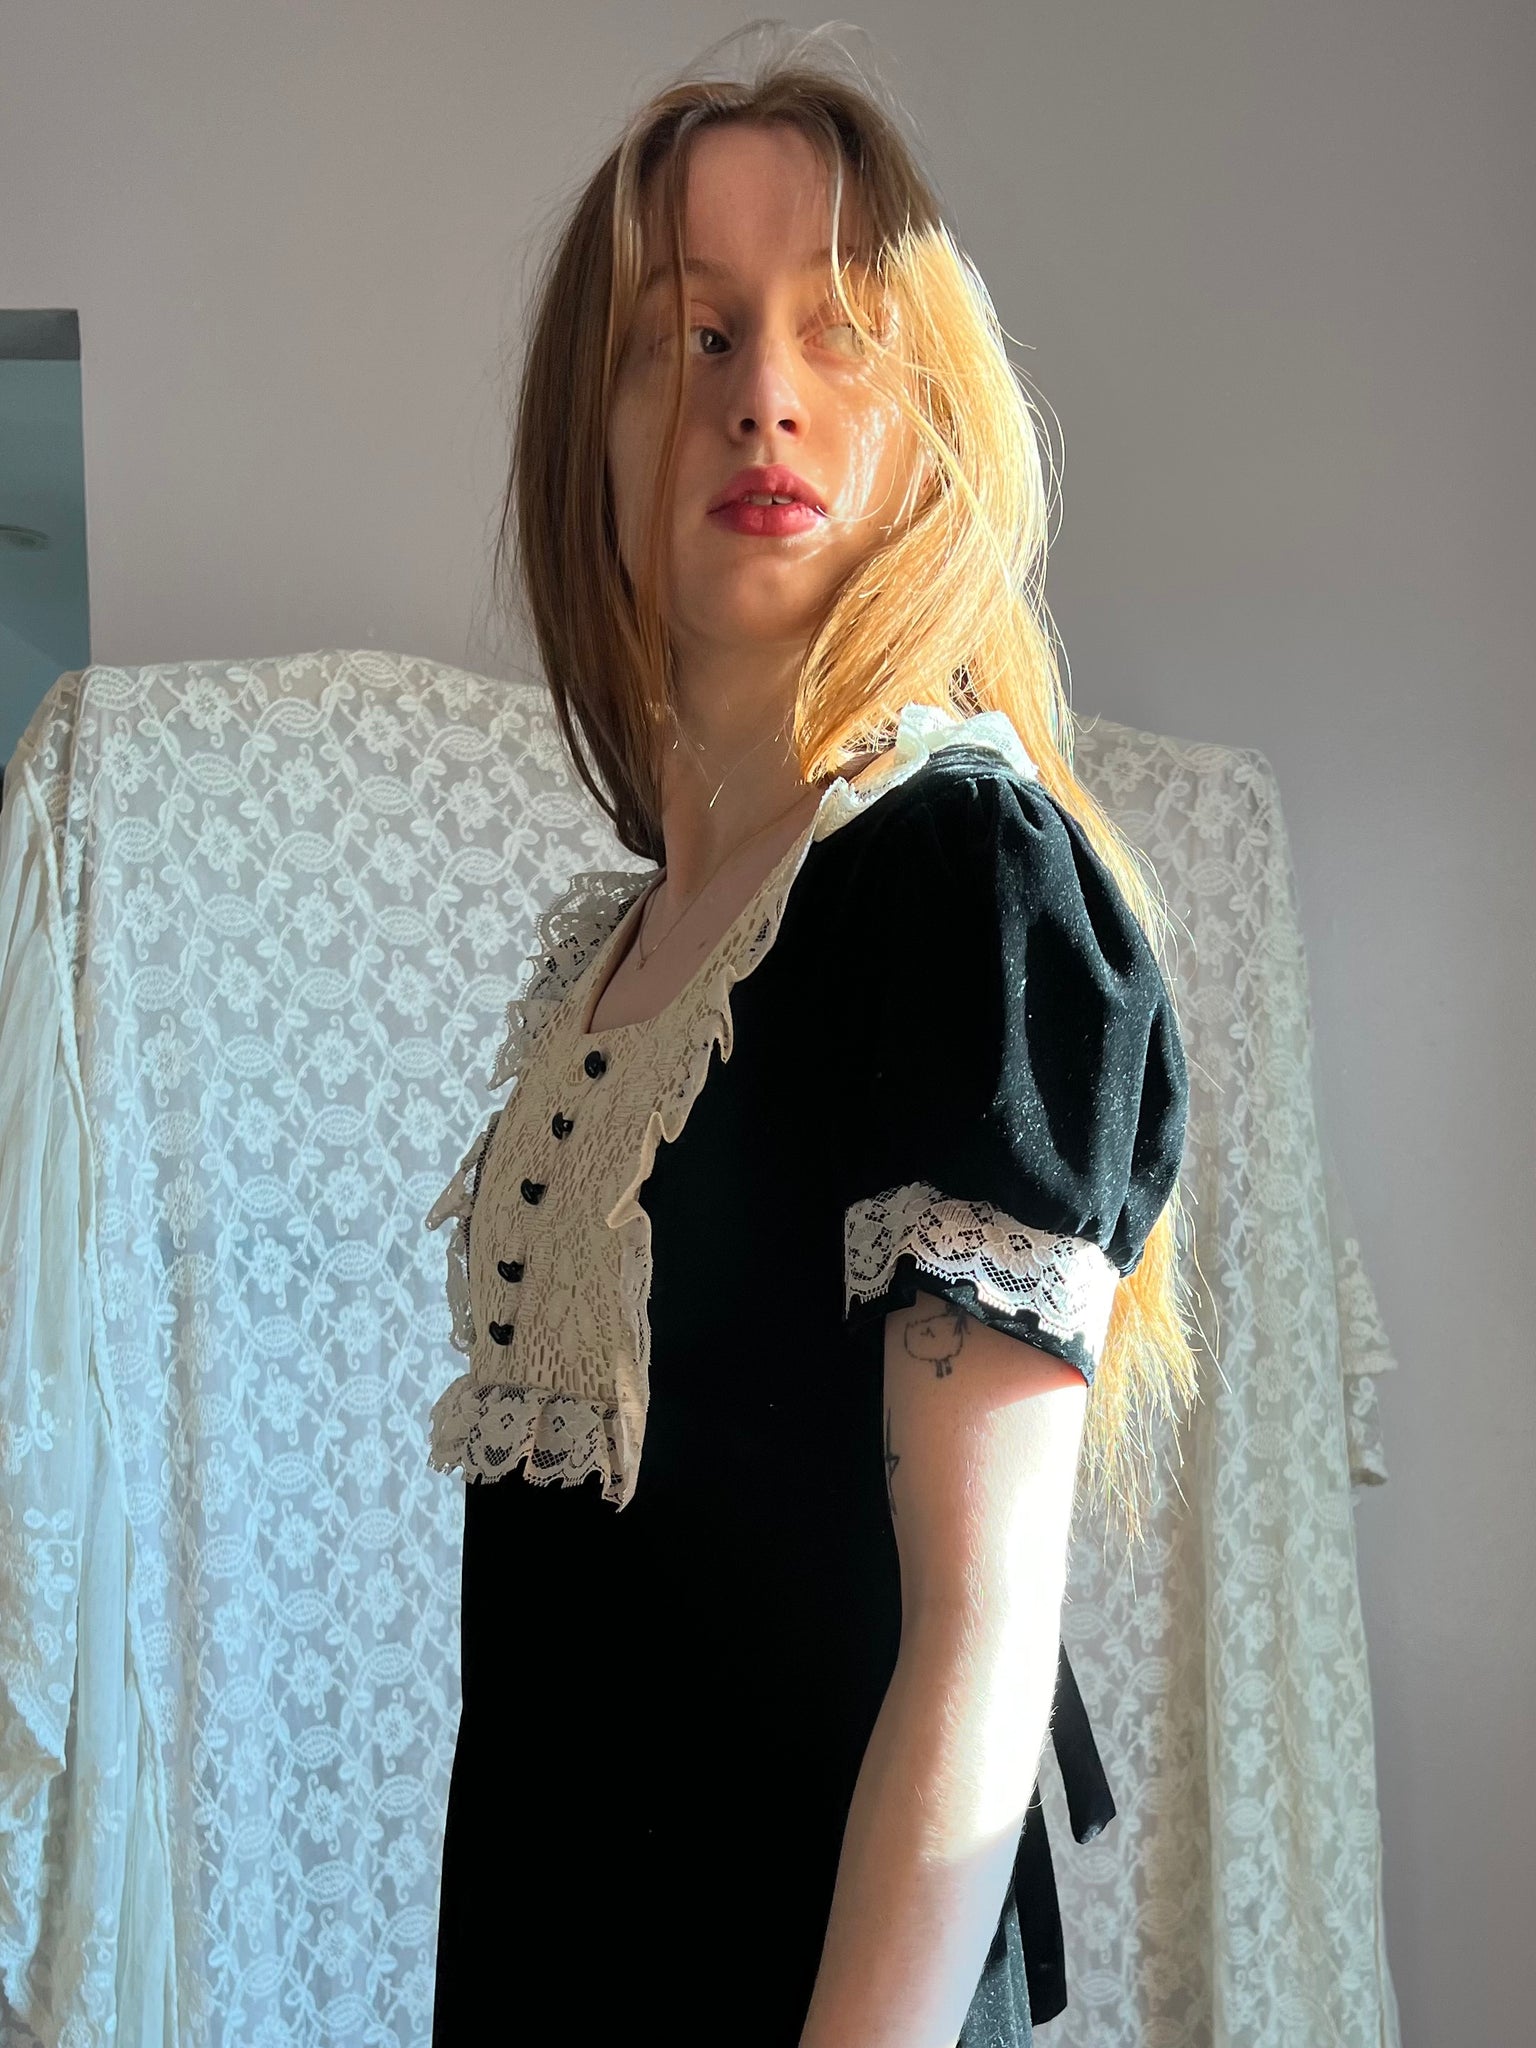 1970s Black Velvet Puff Sleeve Lace Dress